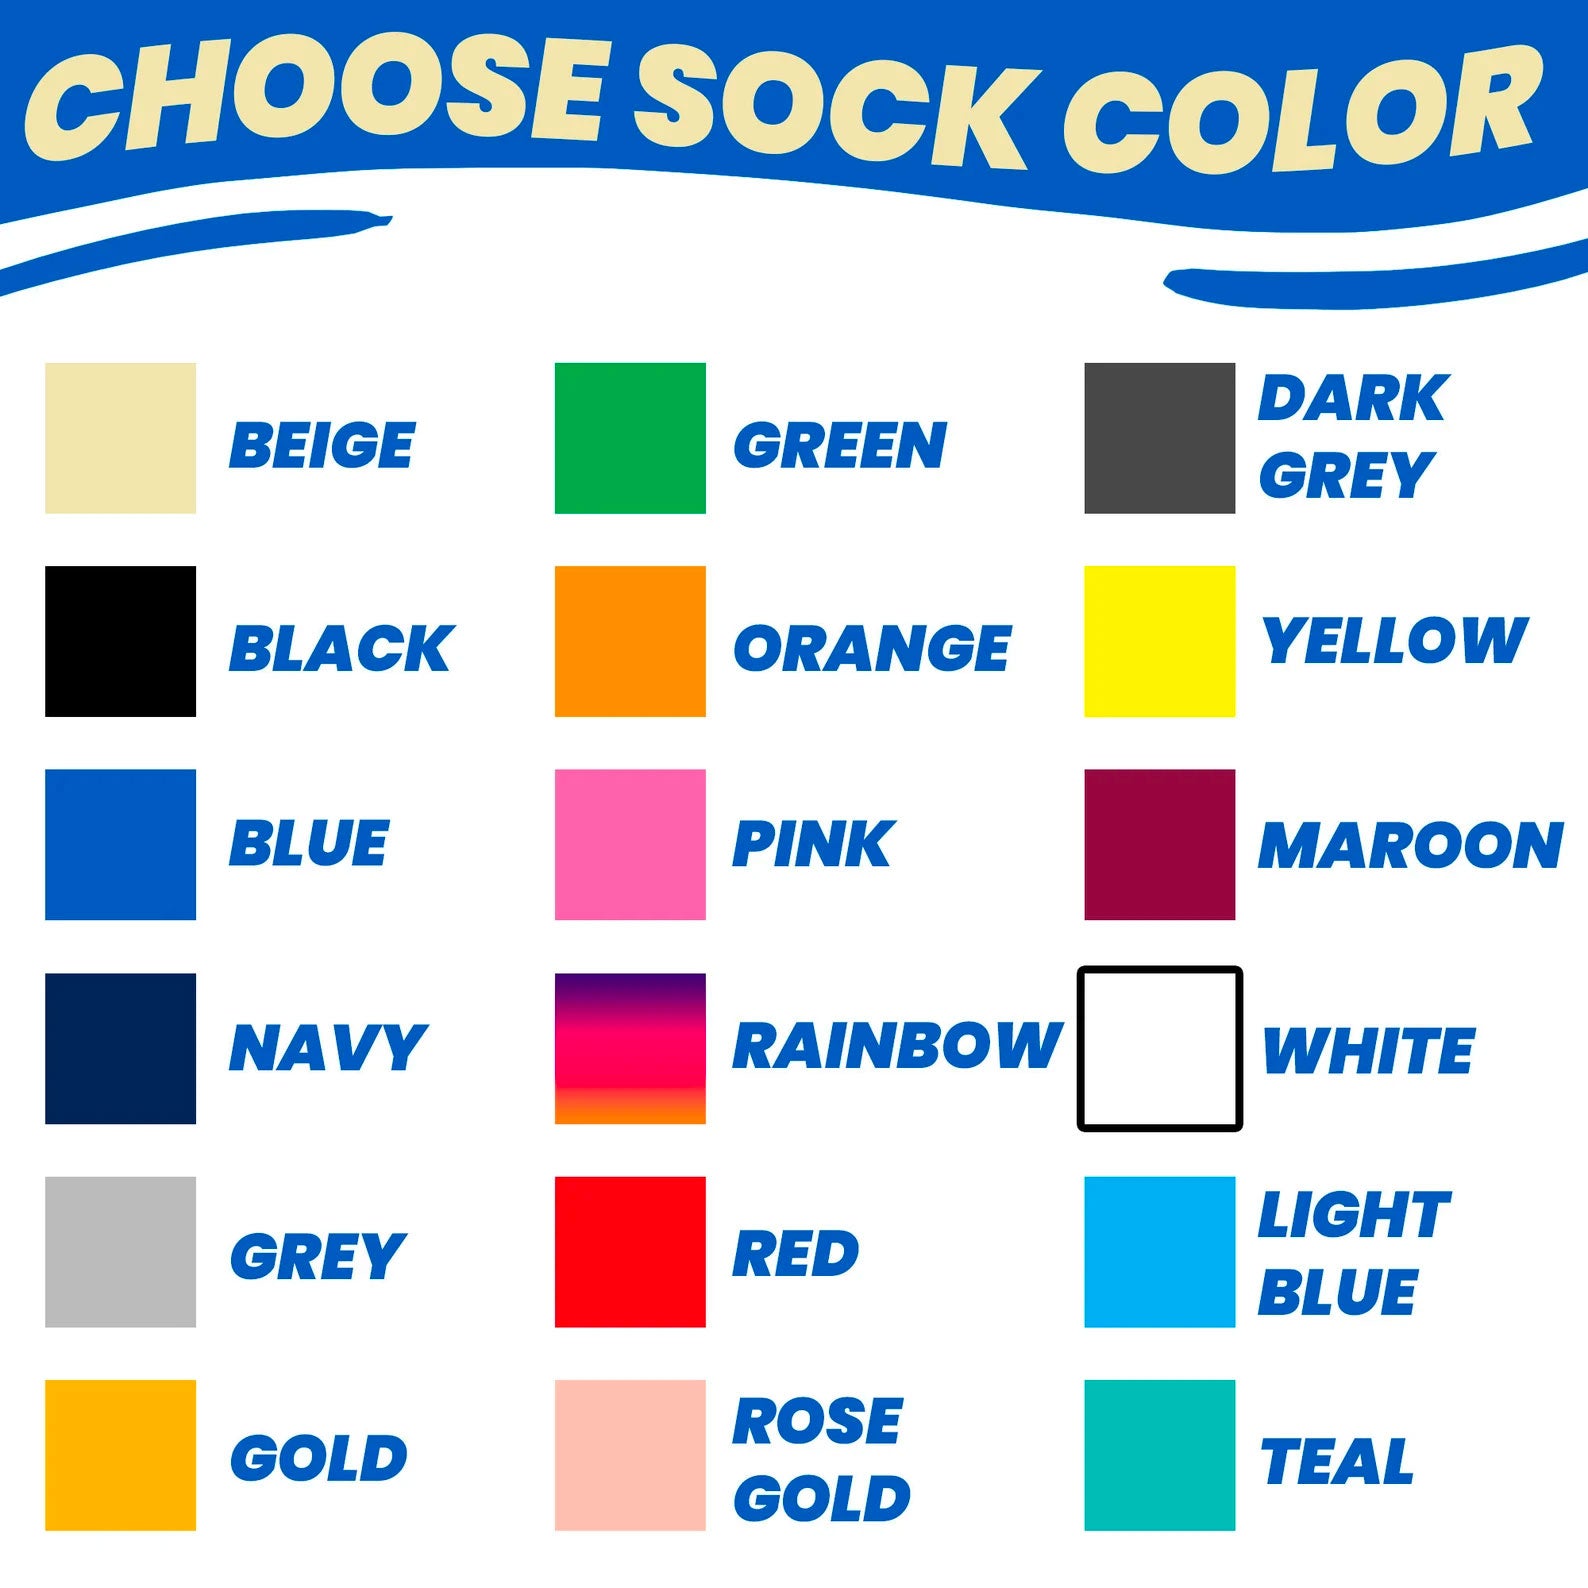 custom best leader socks color swatches available for socks